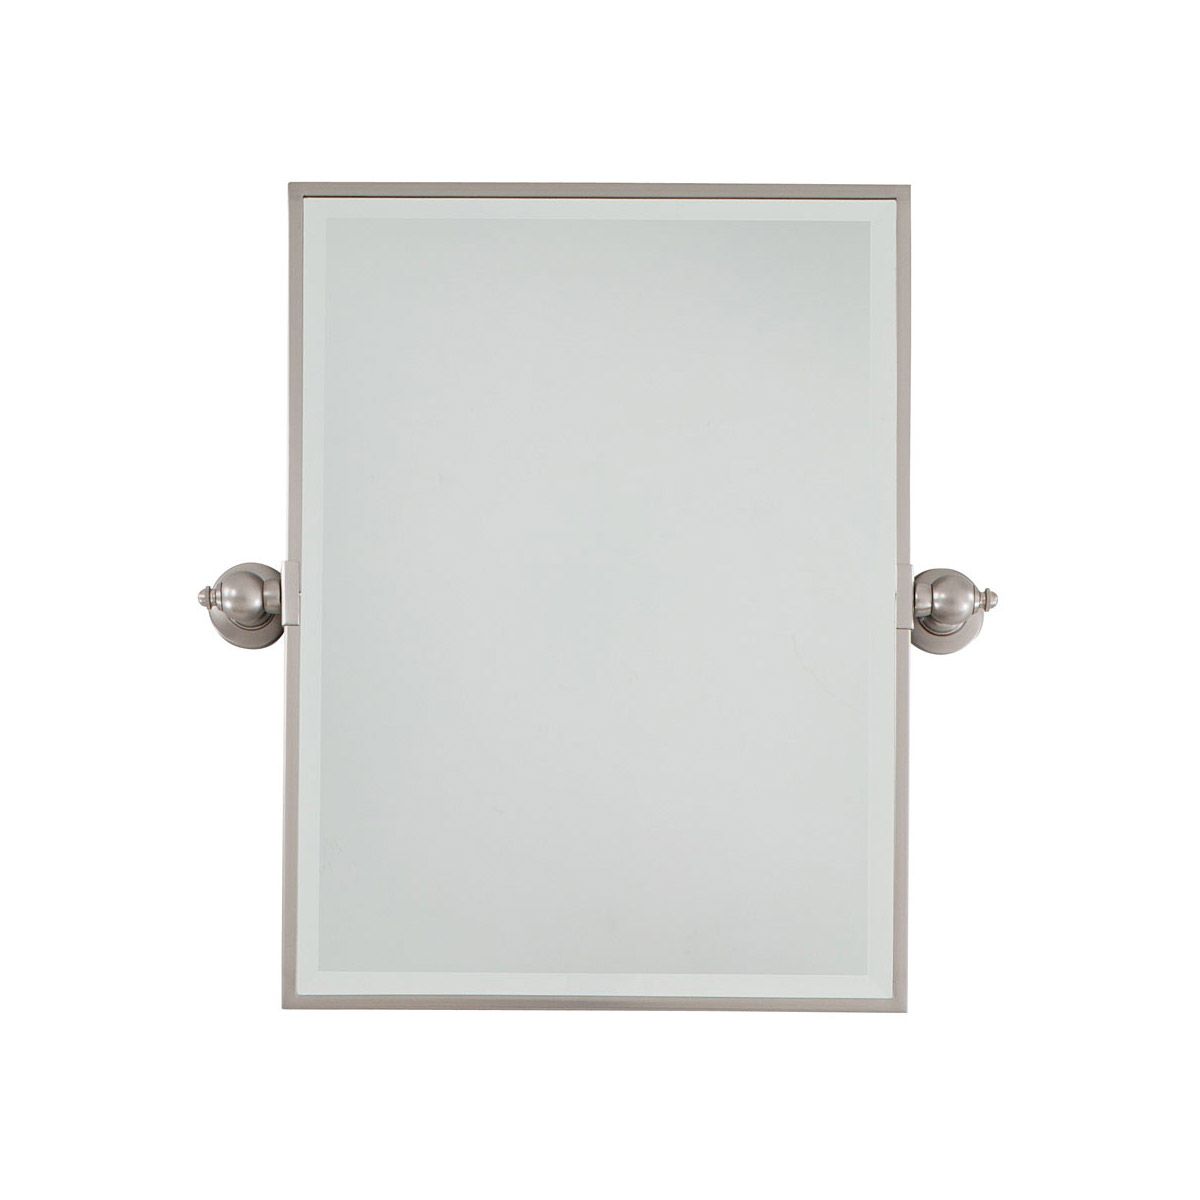 Minka Lavery 1440 84 Pivot Mirrors Wall Mirror Brushed Nickel | Ebay With Polished Nickel Rectangular Wall Mirrors (View 15 of 15)